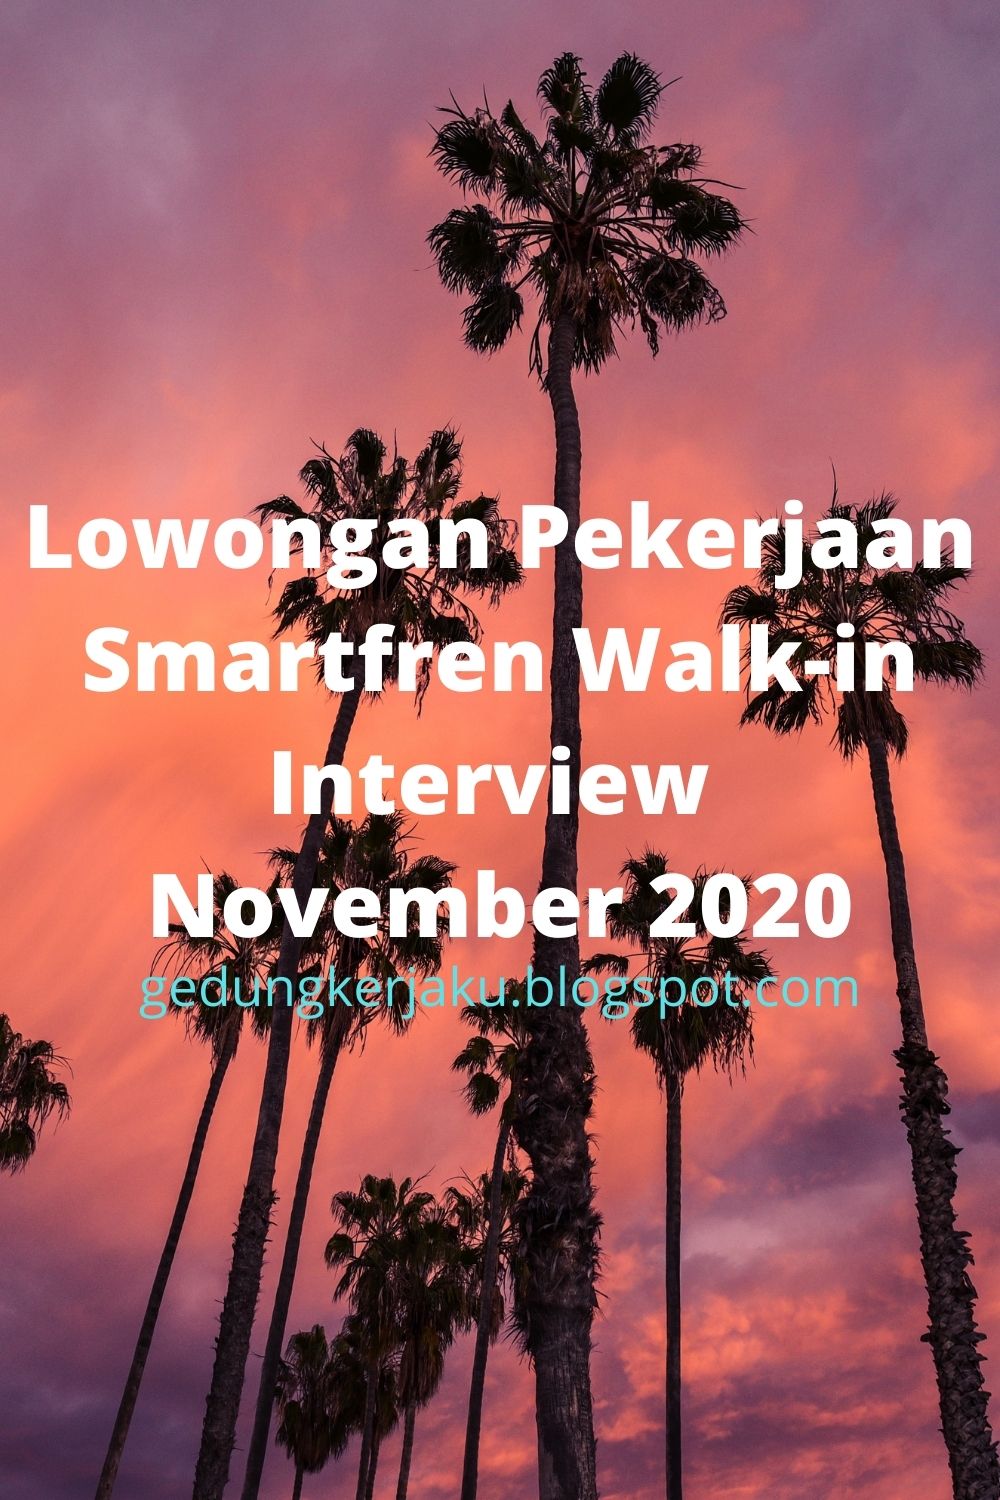 Lowongan Pekerjaan Smartfren Walk-in Interview November 2020